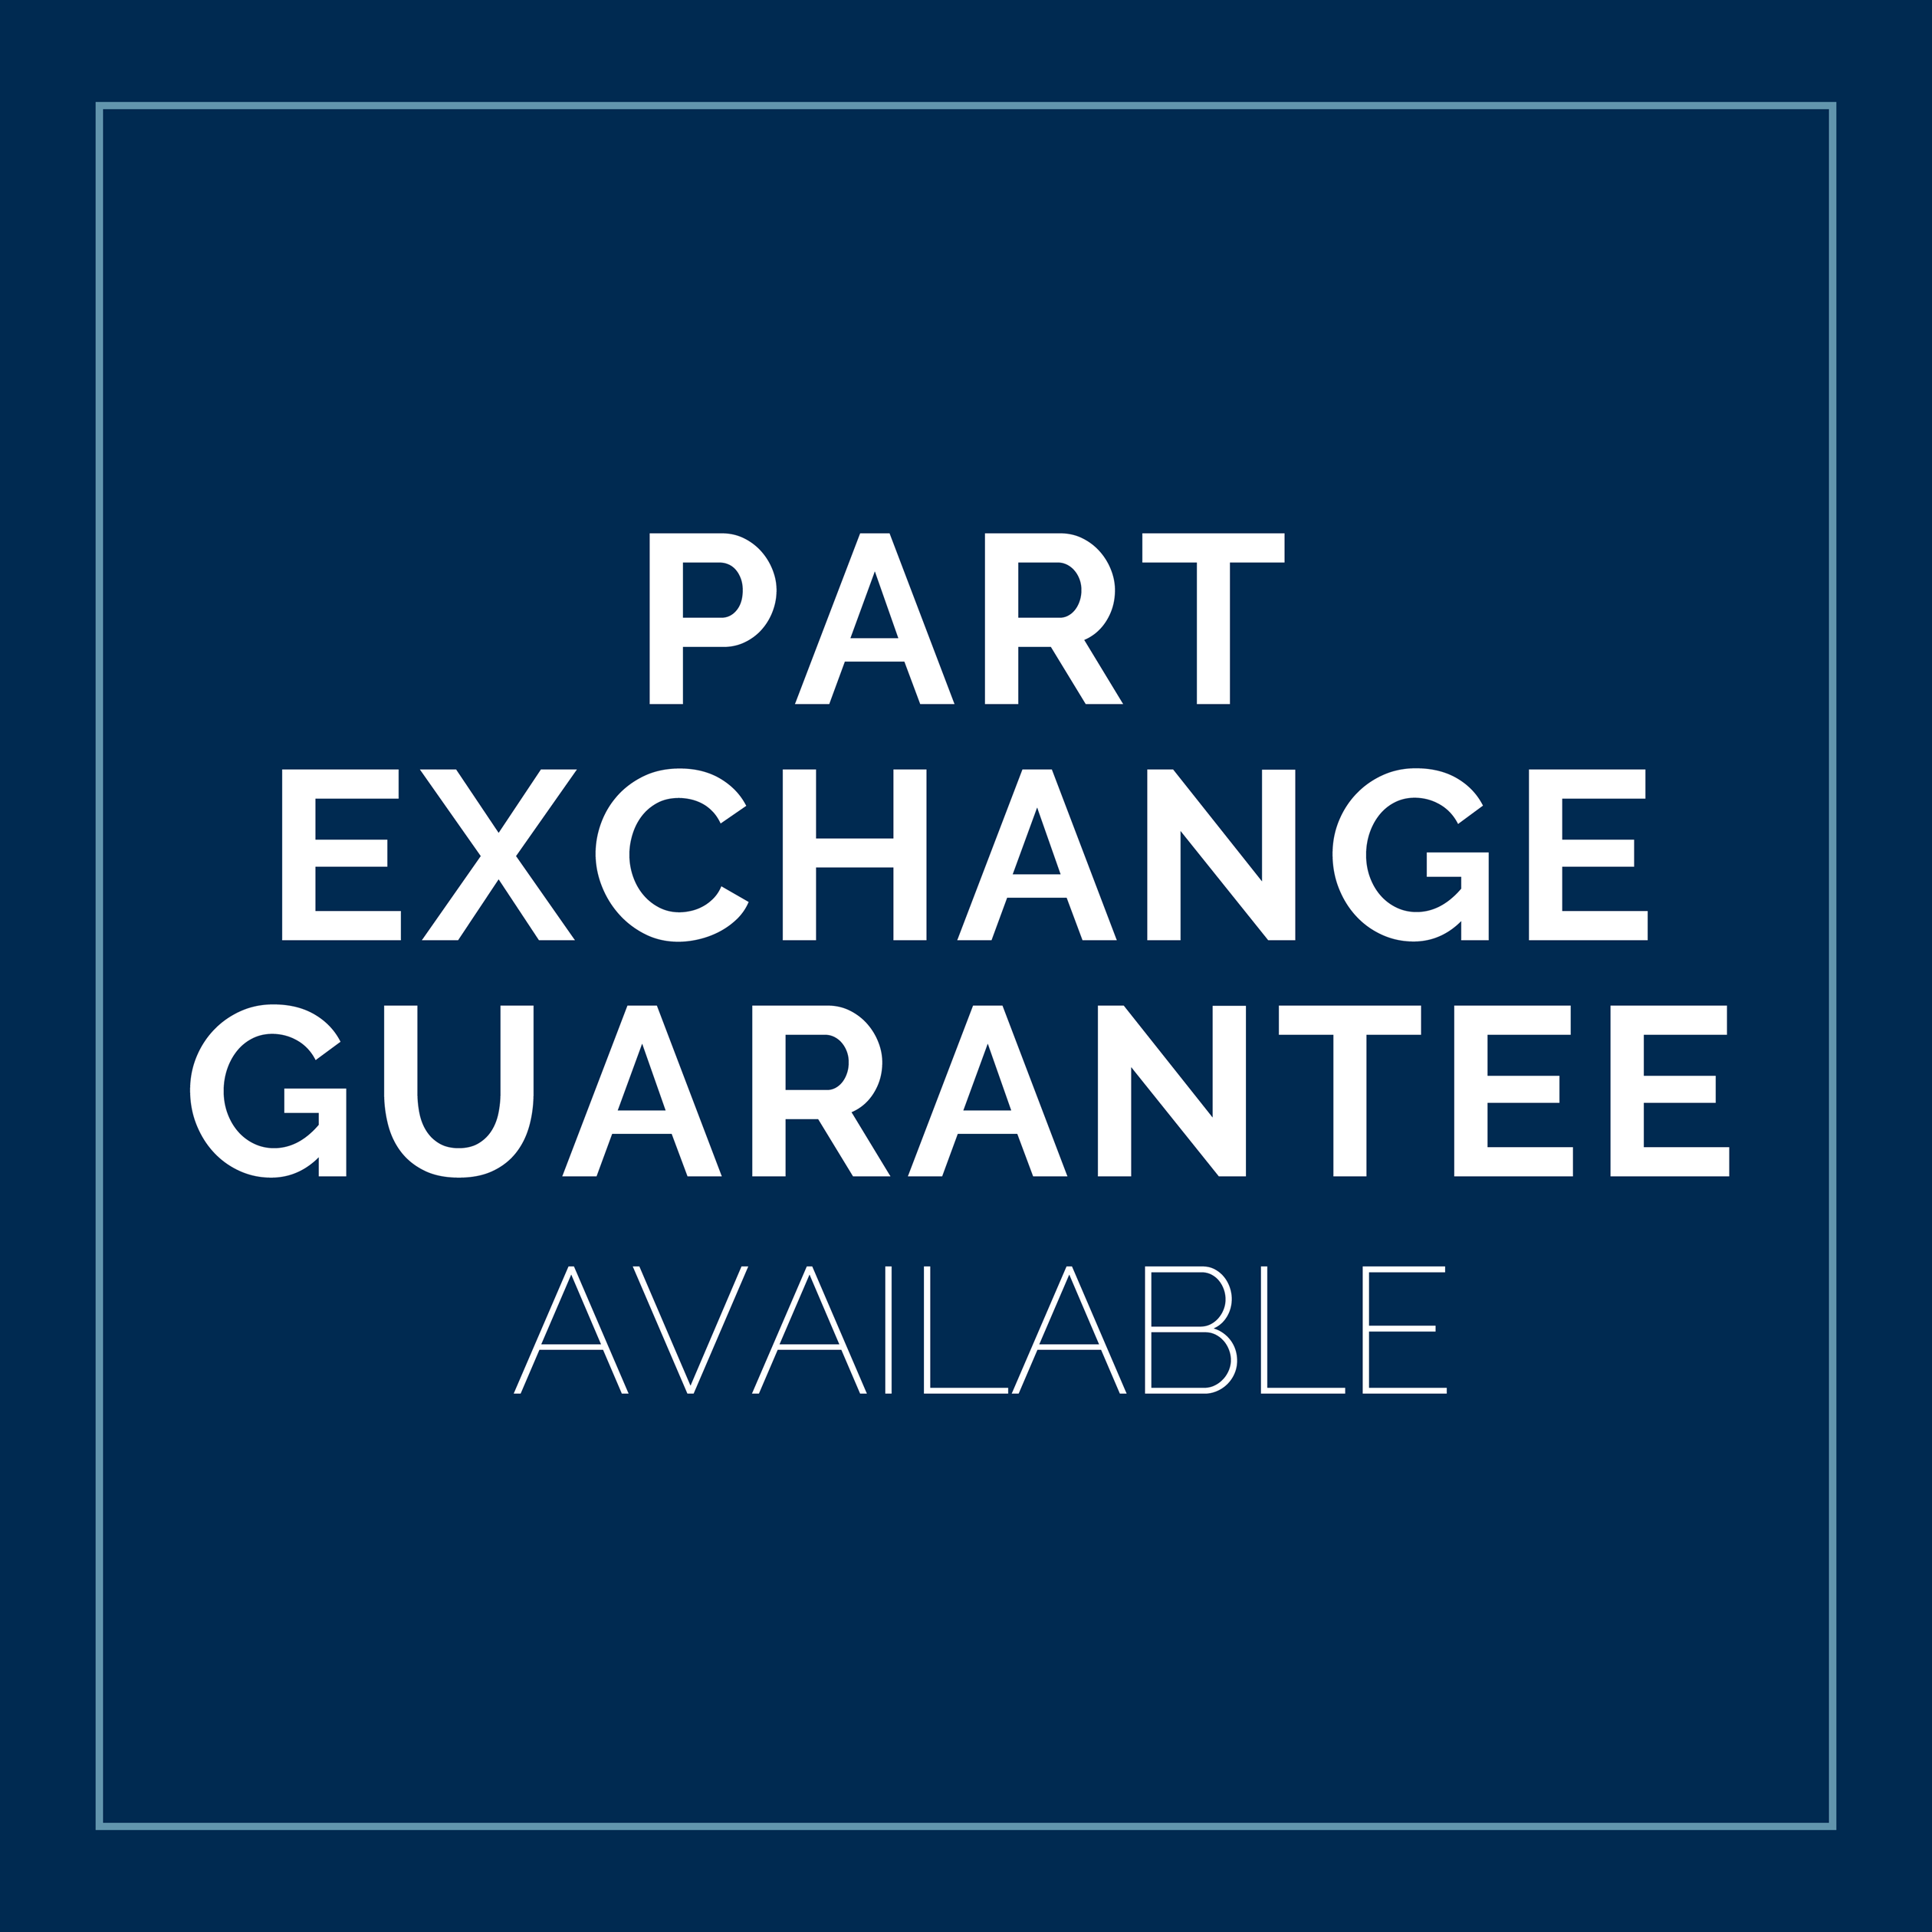 Part Exchange Guarantee Lockup - David Wilson Homes